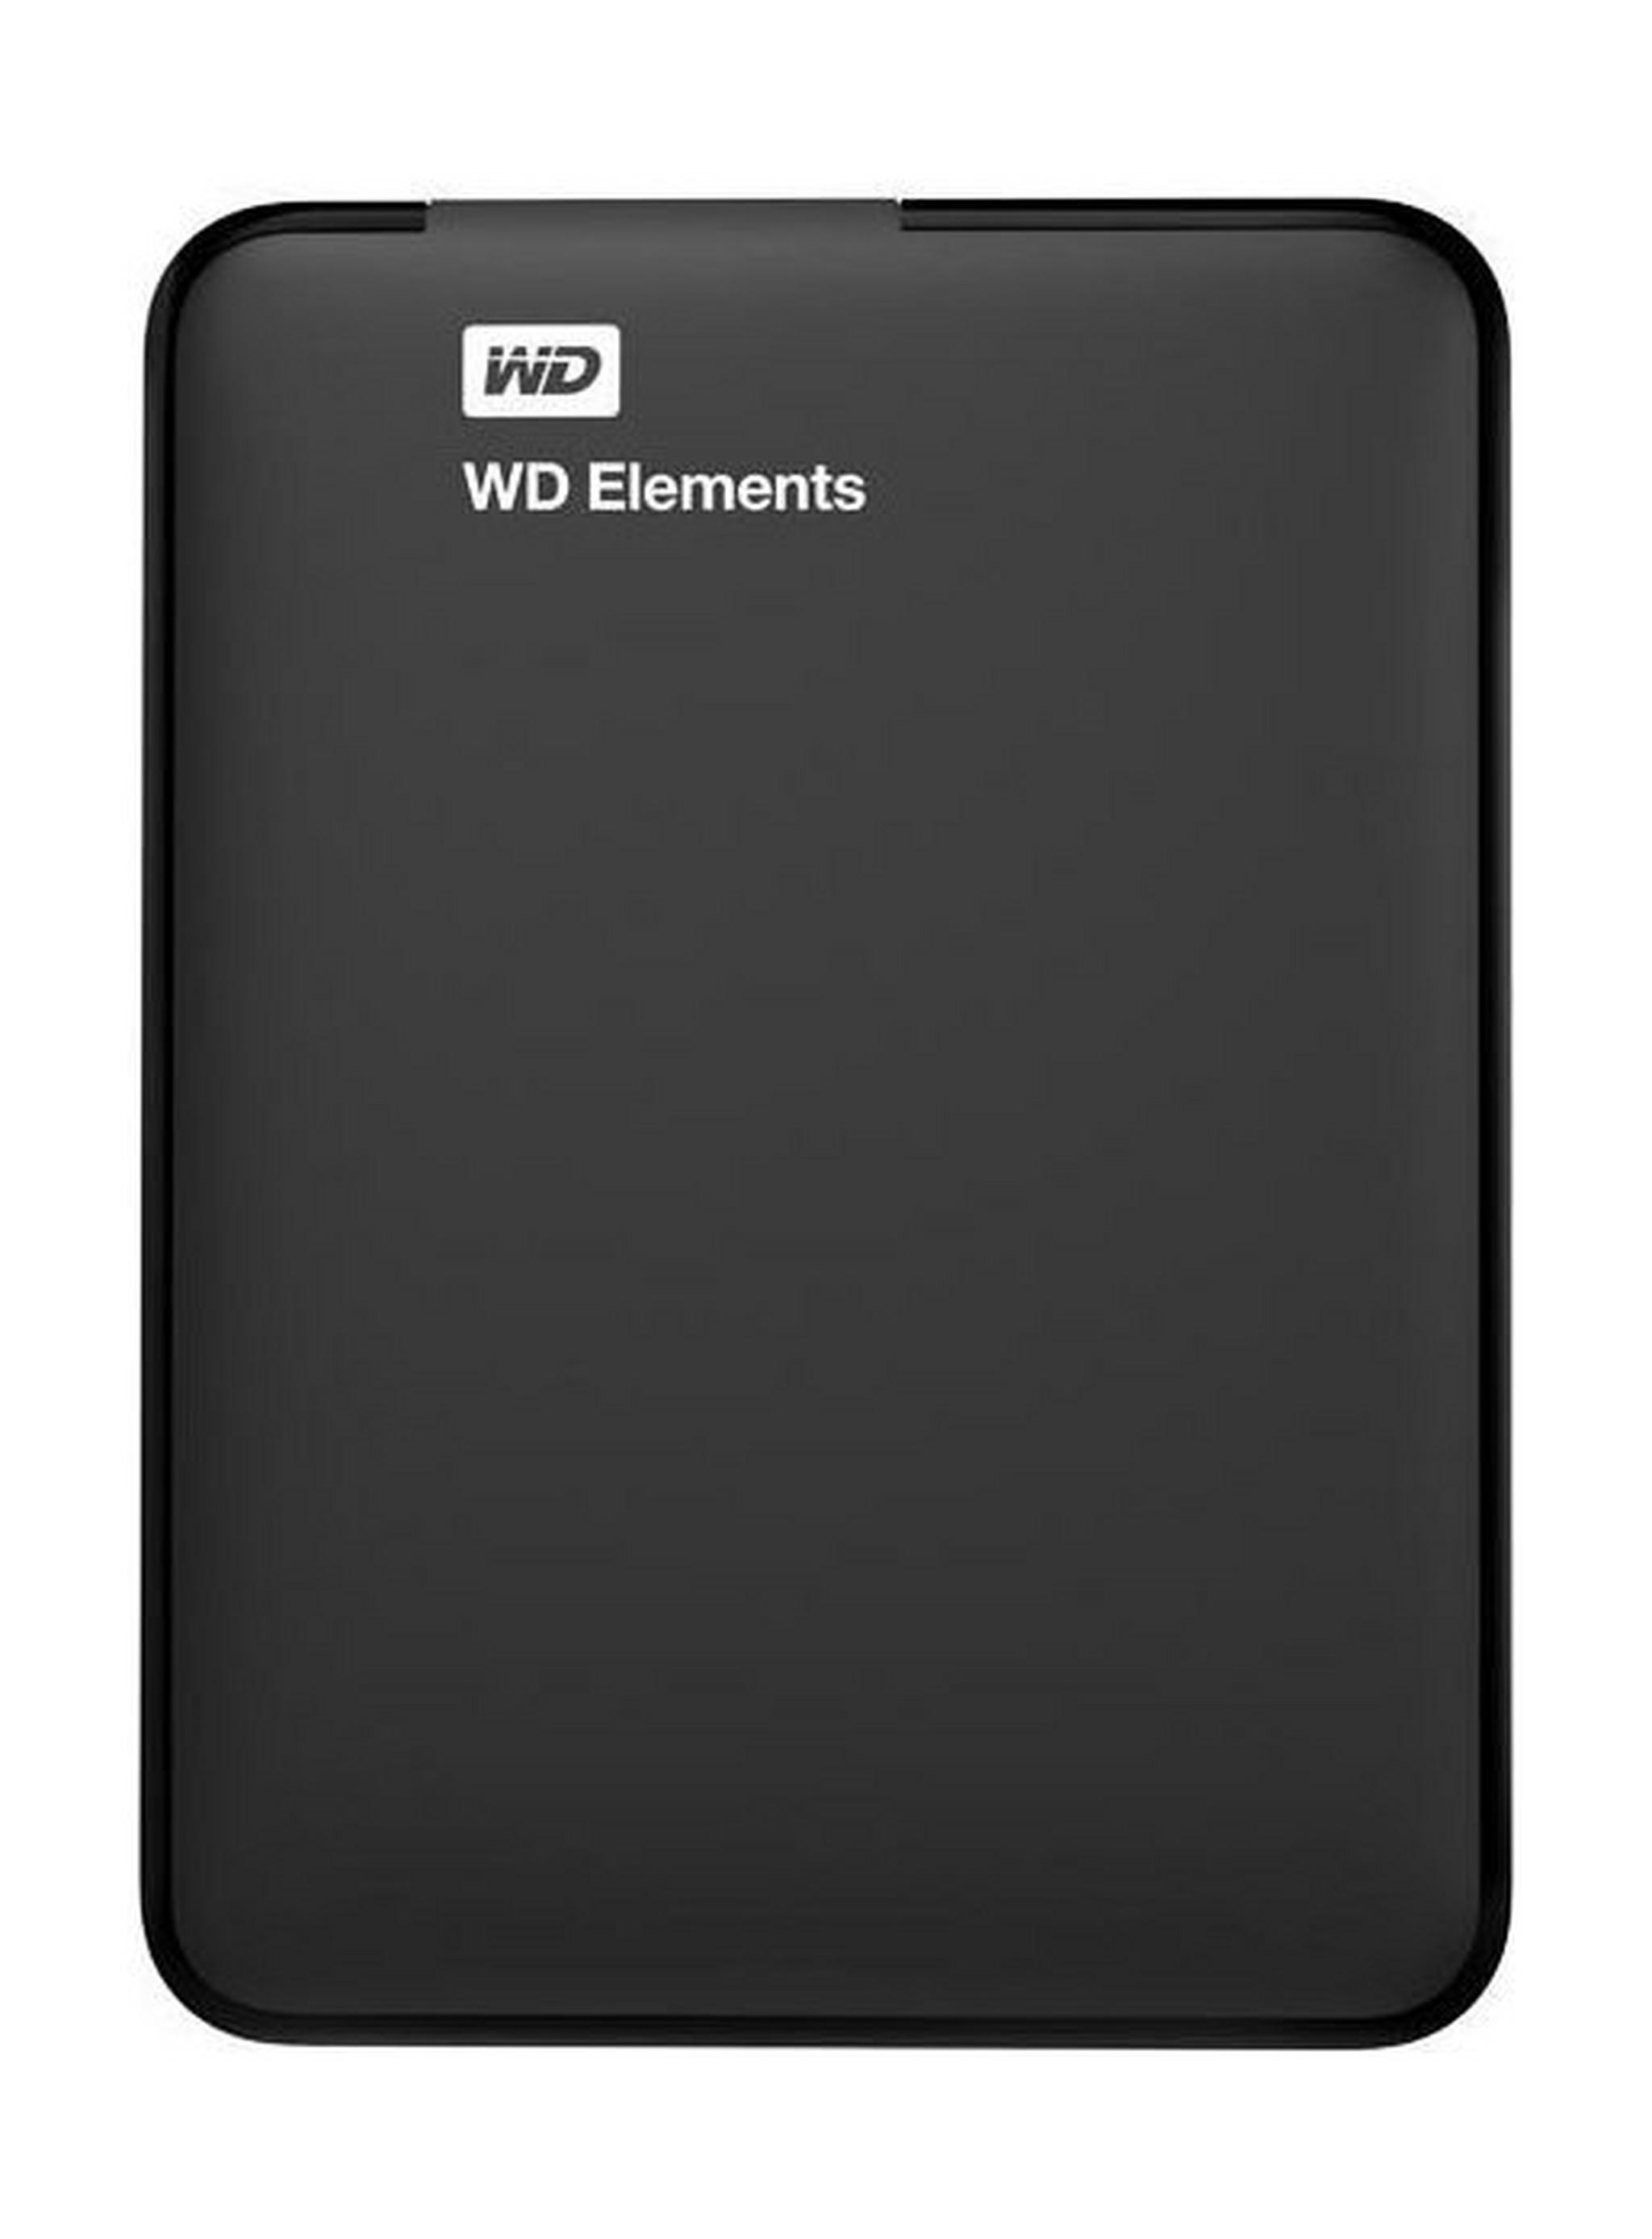 WD Elements 1TB USB 3.0 2.5-inch Portable Hard Drive + Sandisk Cruzer Blade Flash Drive 16GB + Case